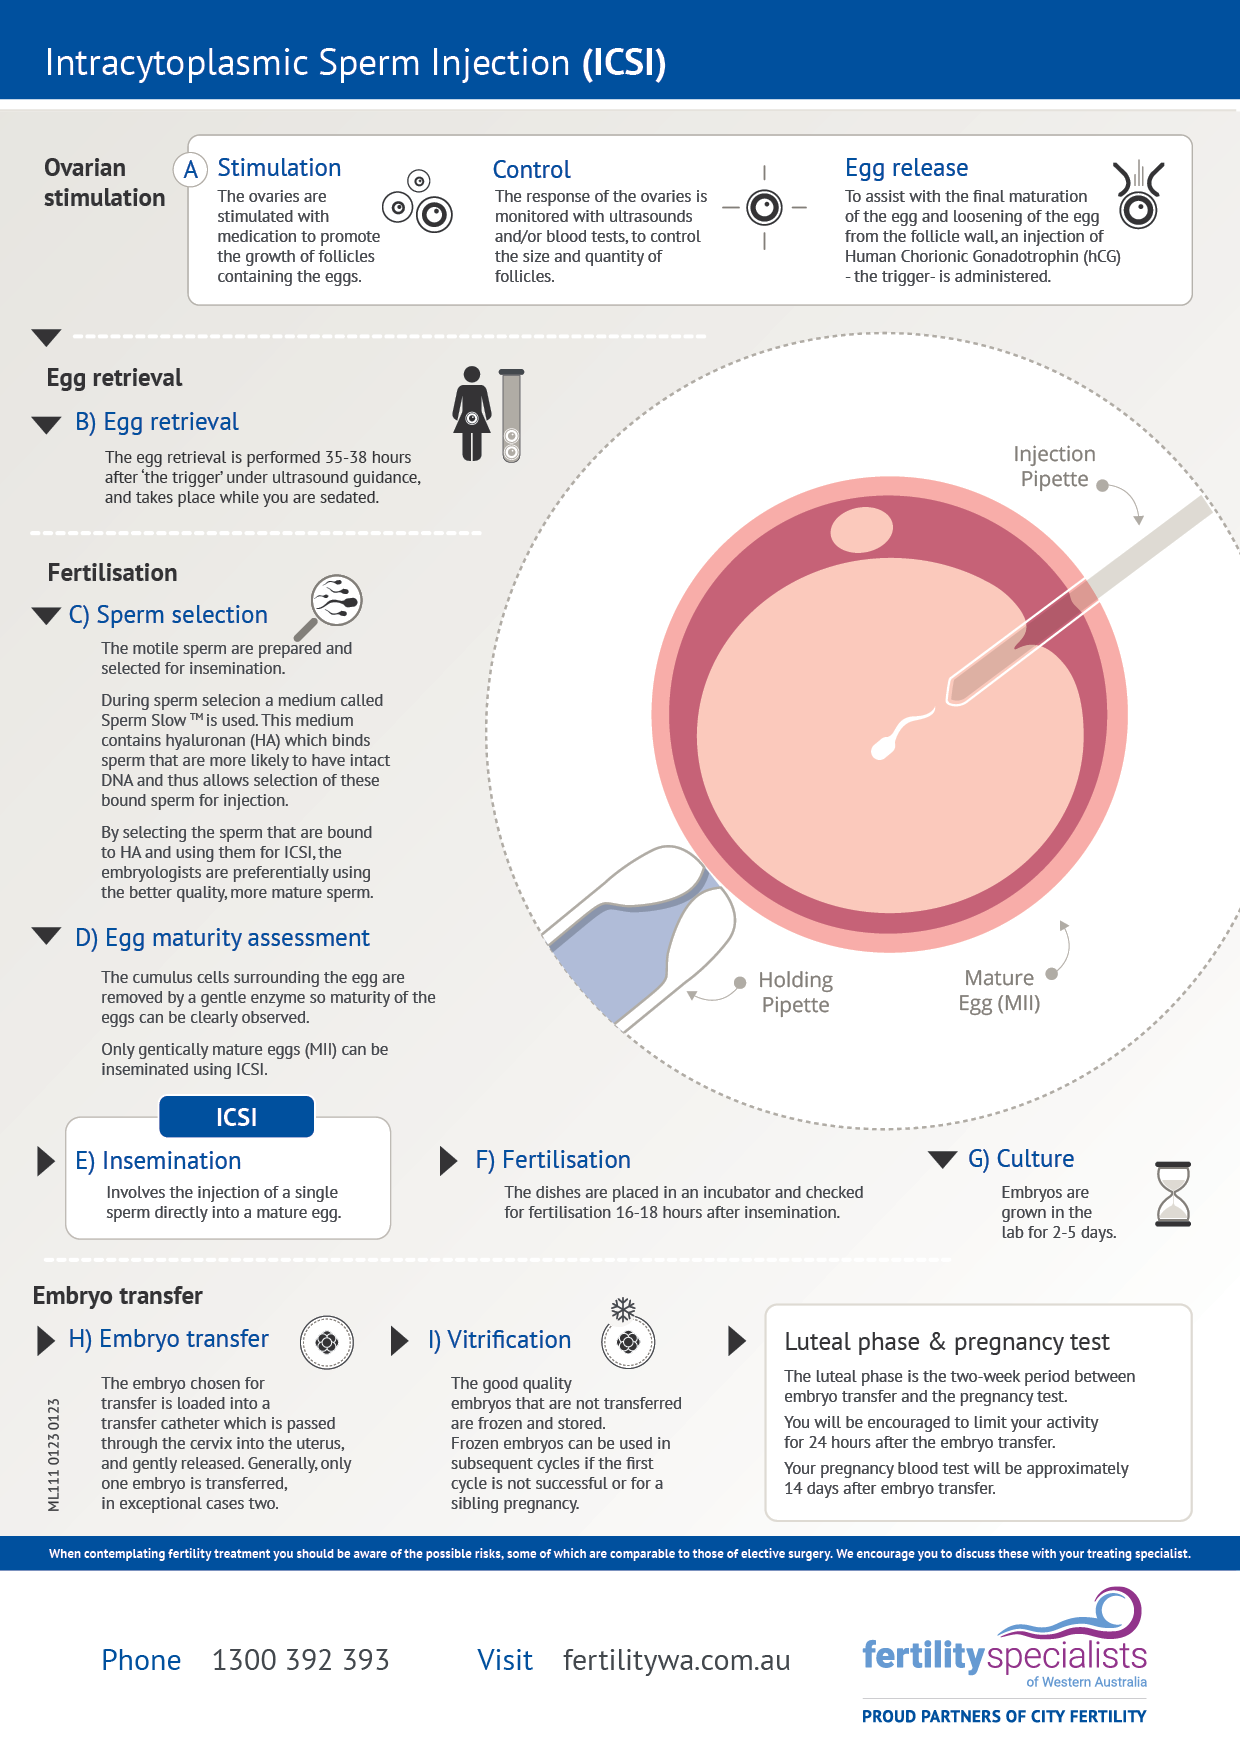 Intracytoplasmic Sperm Injection (ICSI) Infographic